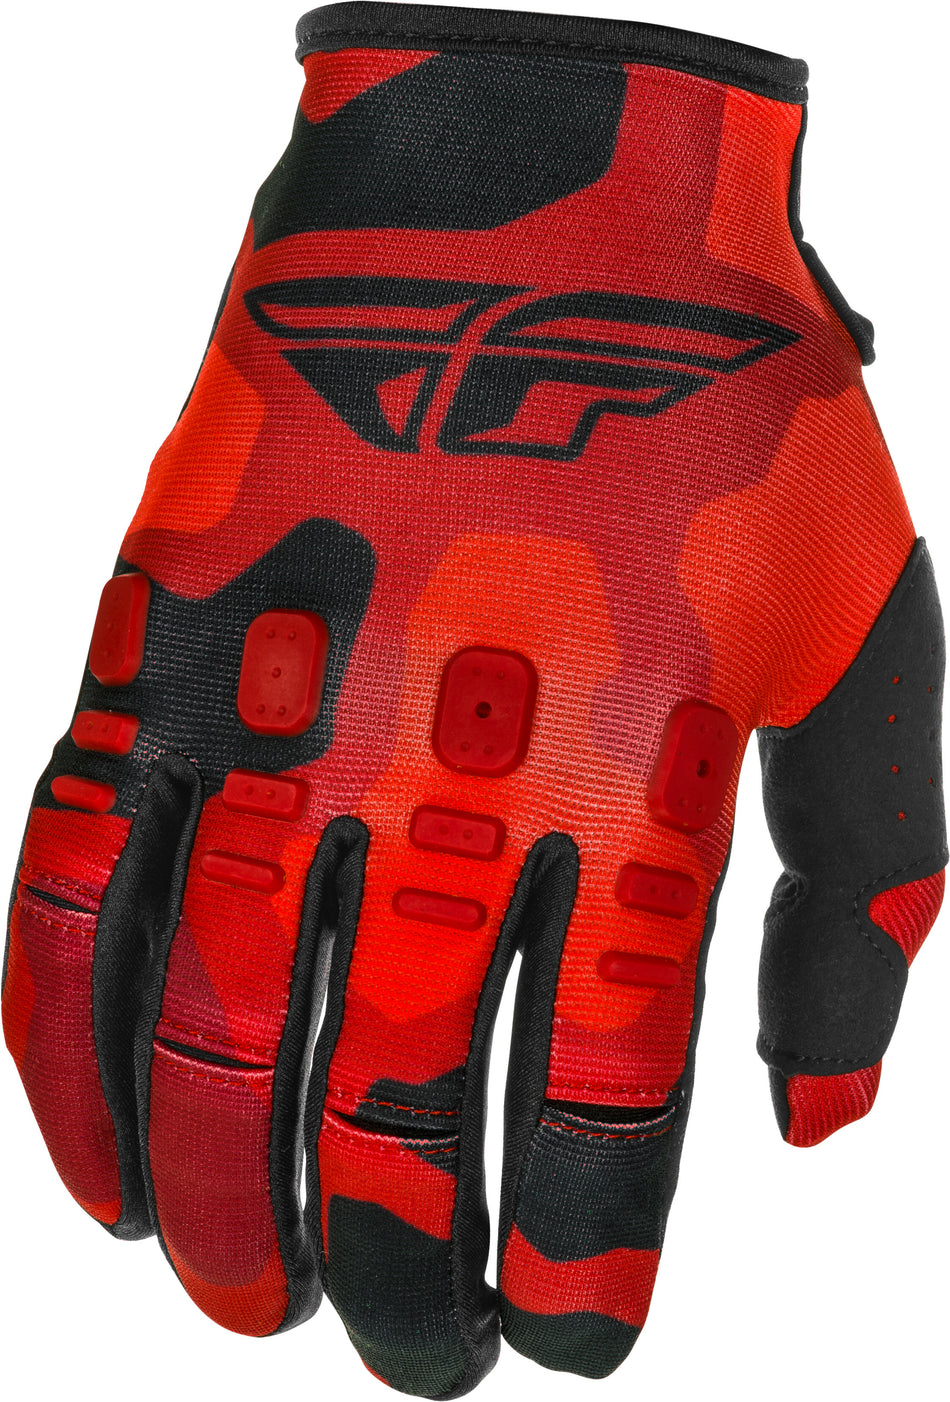 FLY RACING Kinetic K221 Gloves Red/Black Sz 11 374-51211